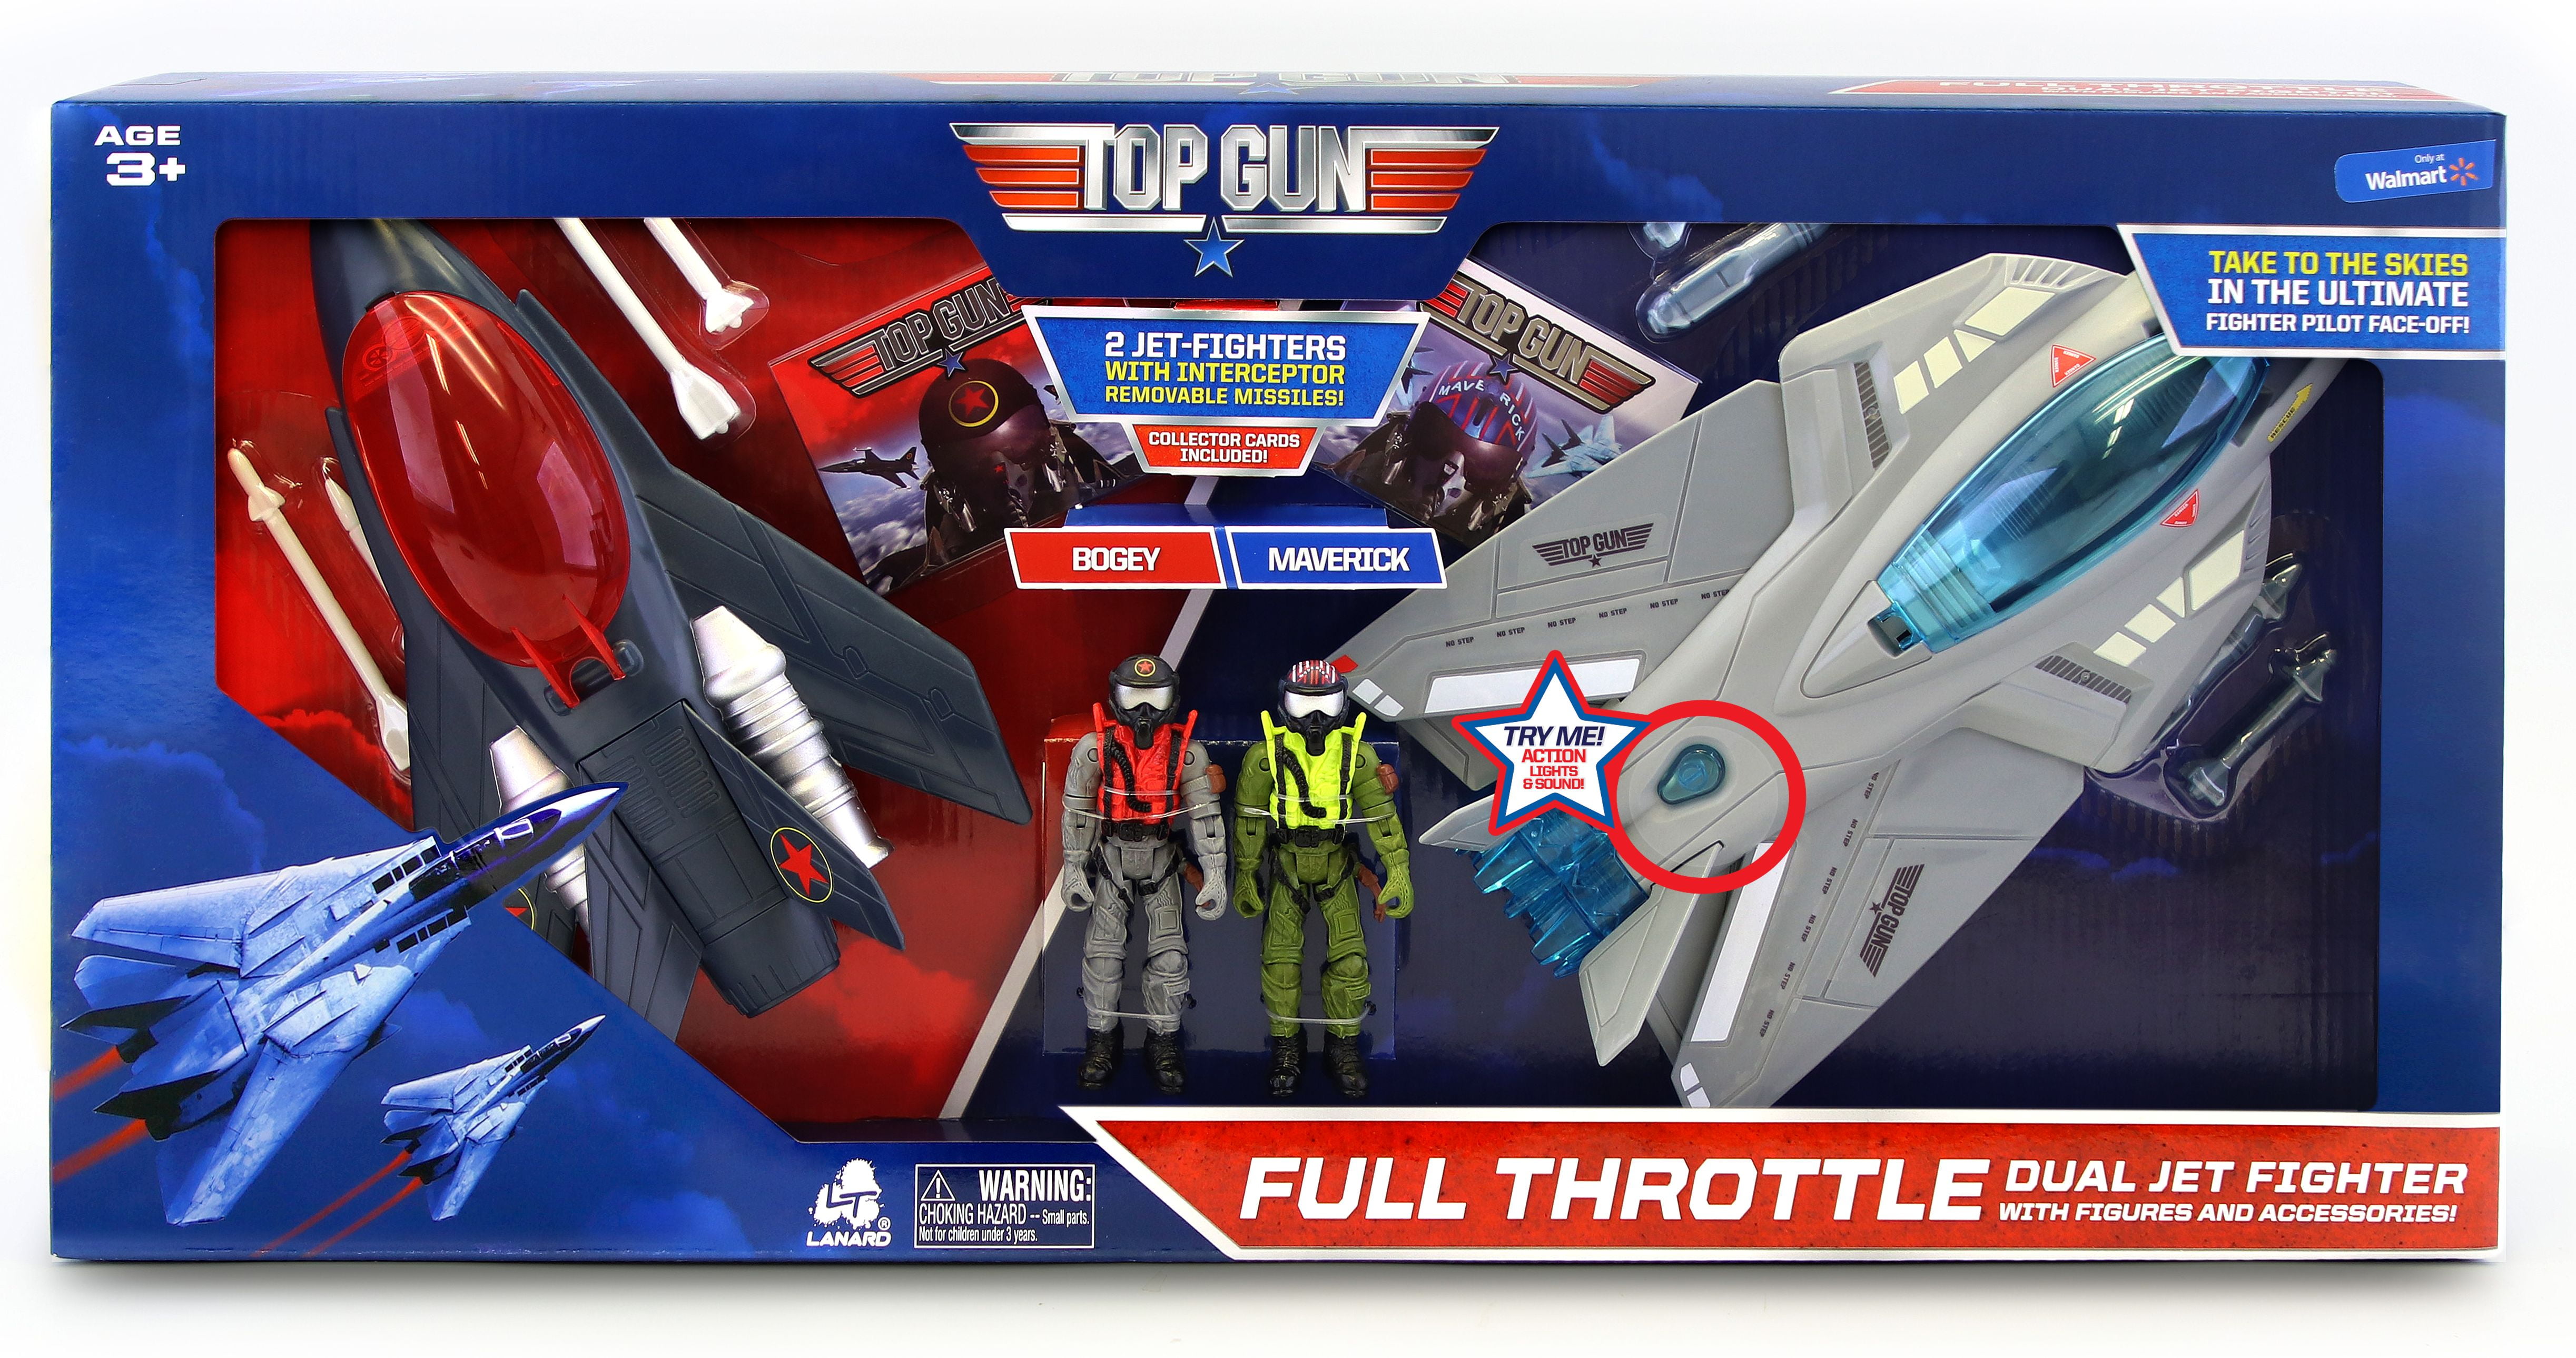 Top Gun Full Throttle Dual Jet Fighter Figure Playset Walmart 2 Jets for sale online